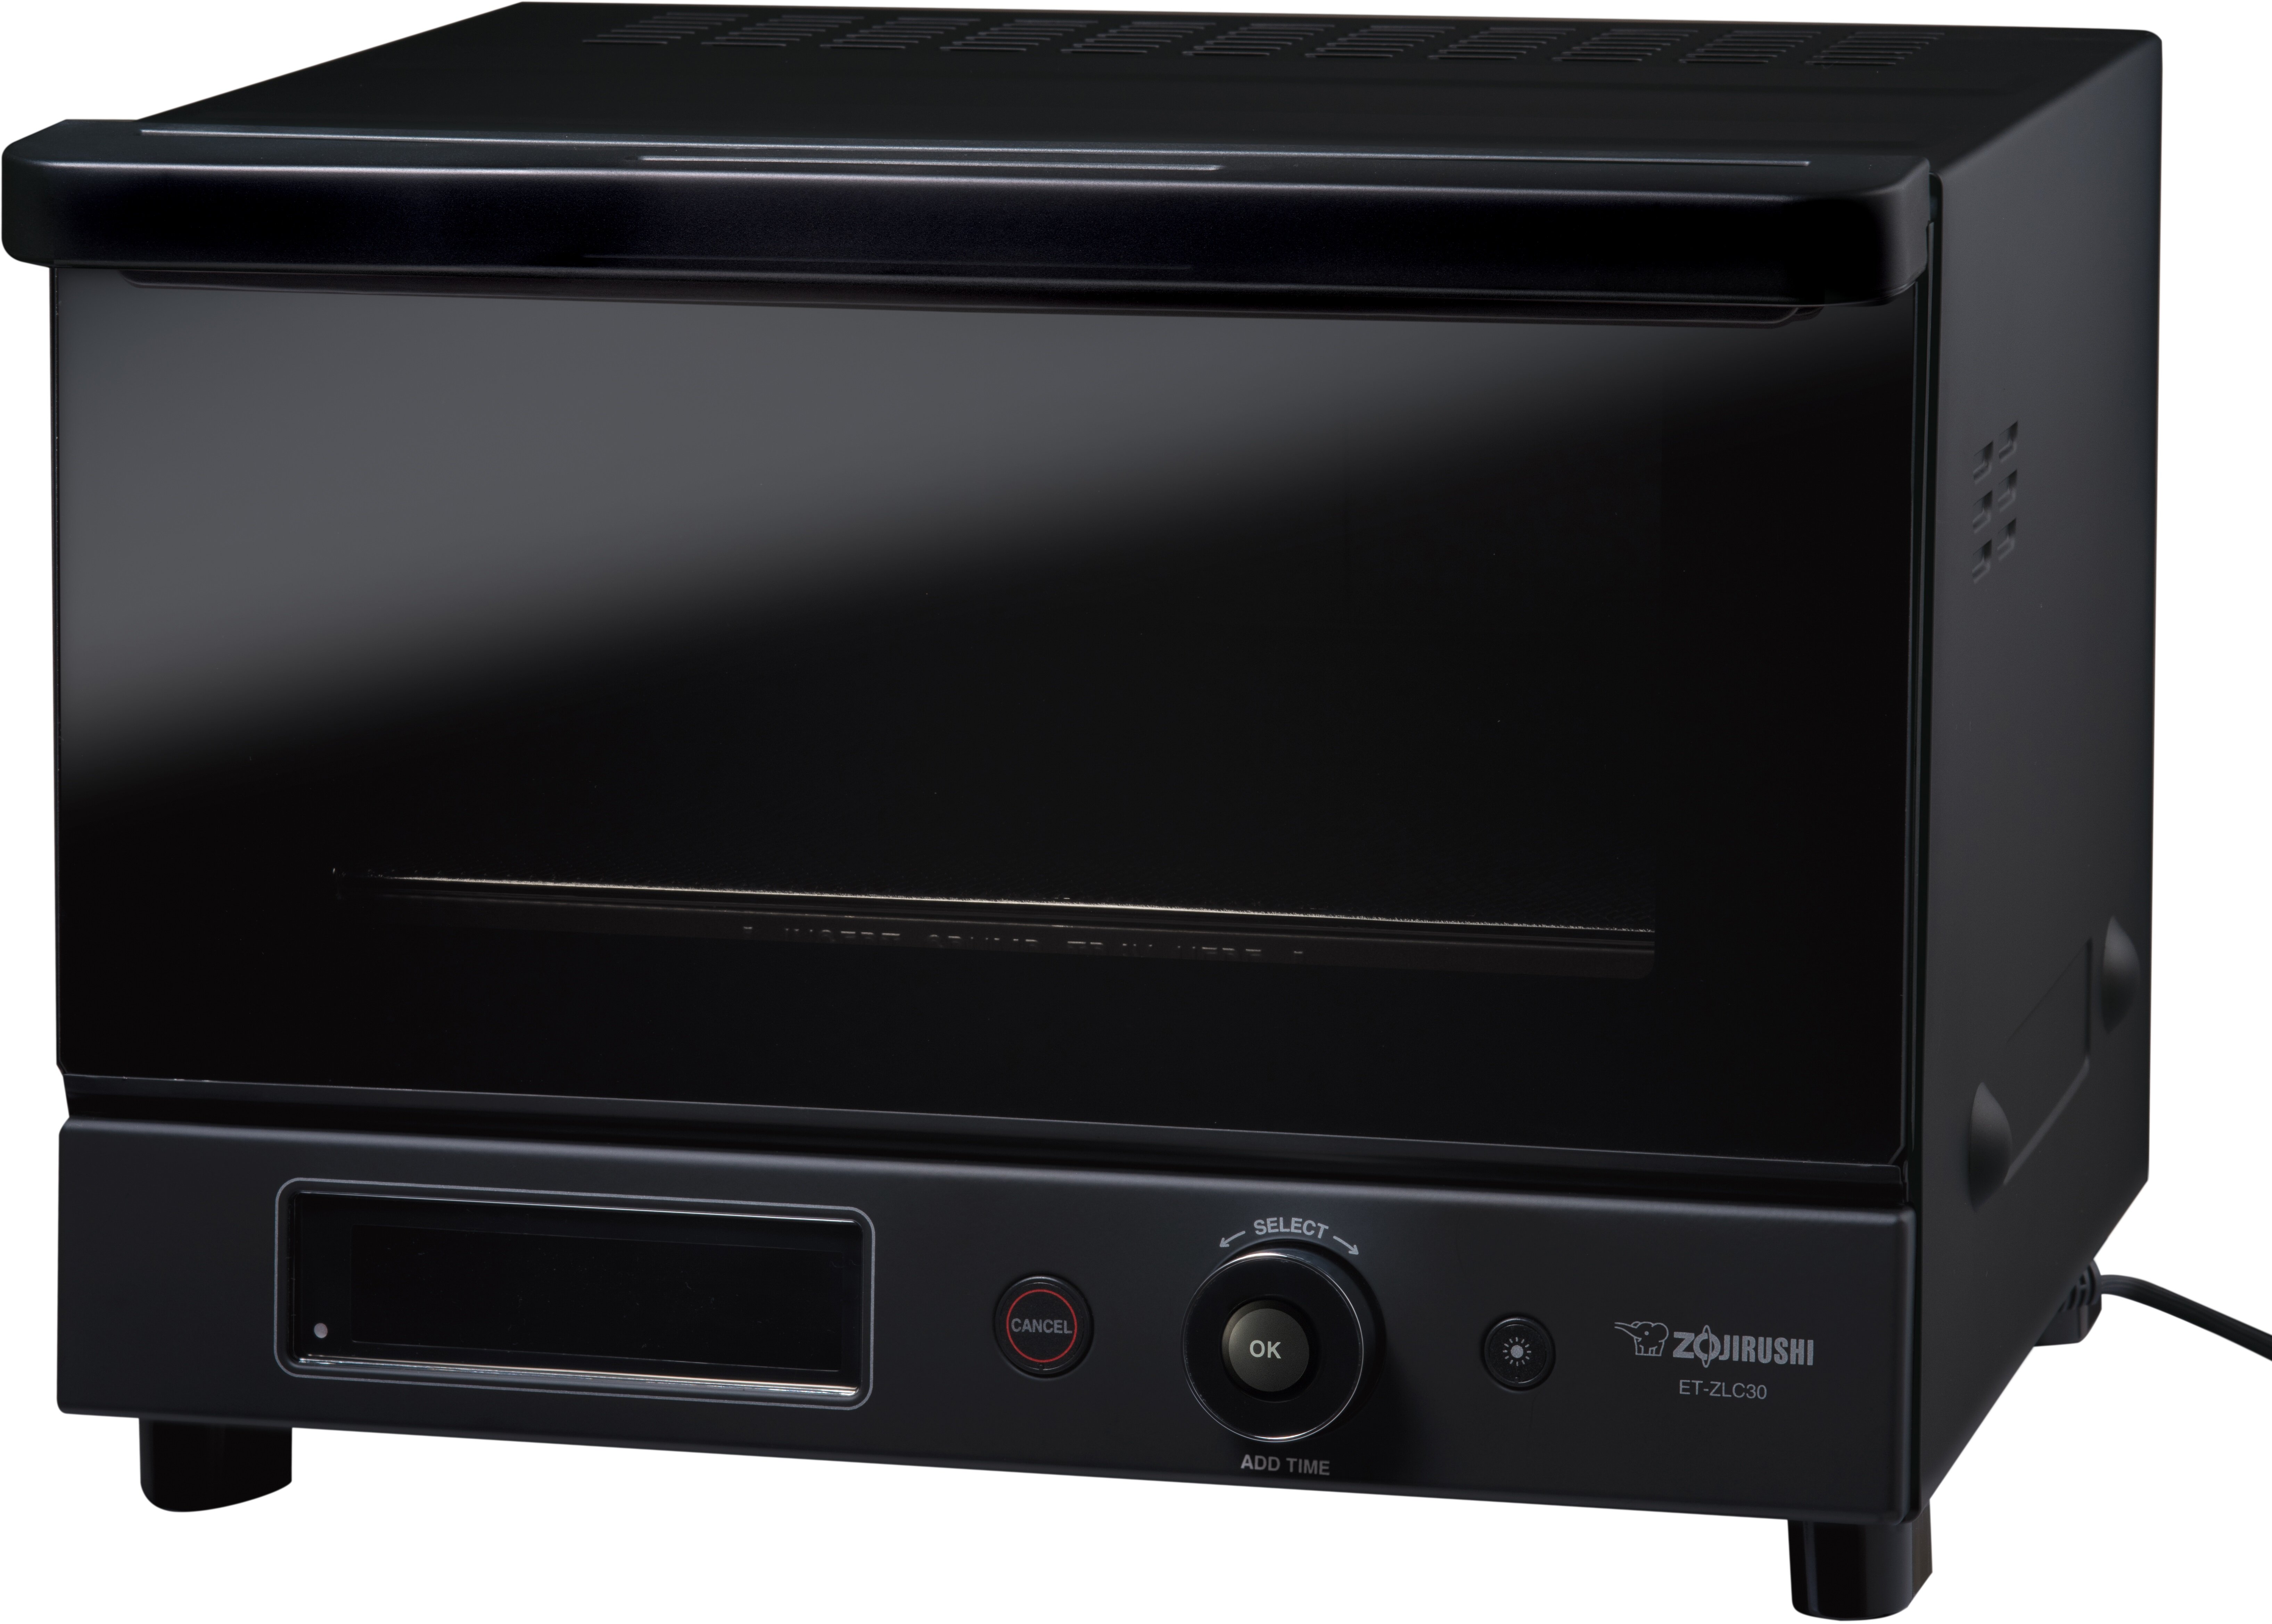 生活家電 調理機器 Zojirushi Micom Toaster Oven, Black